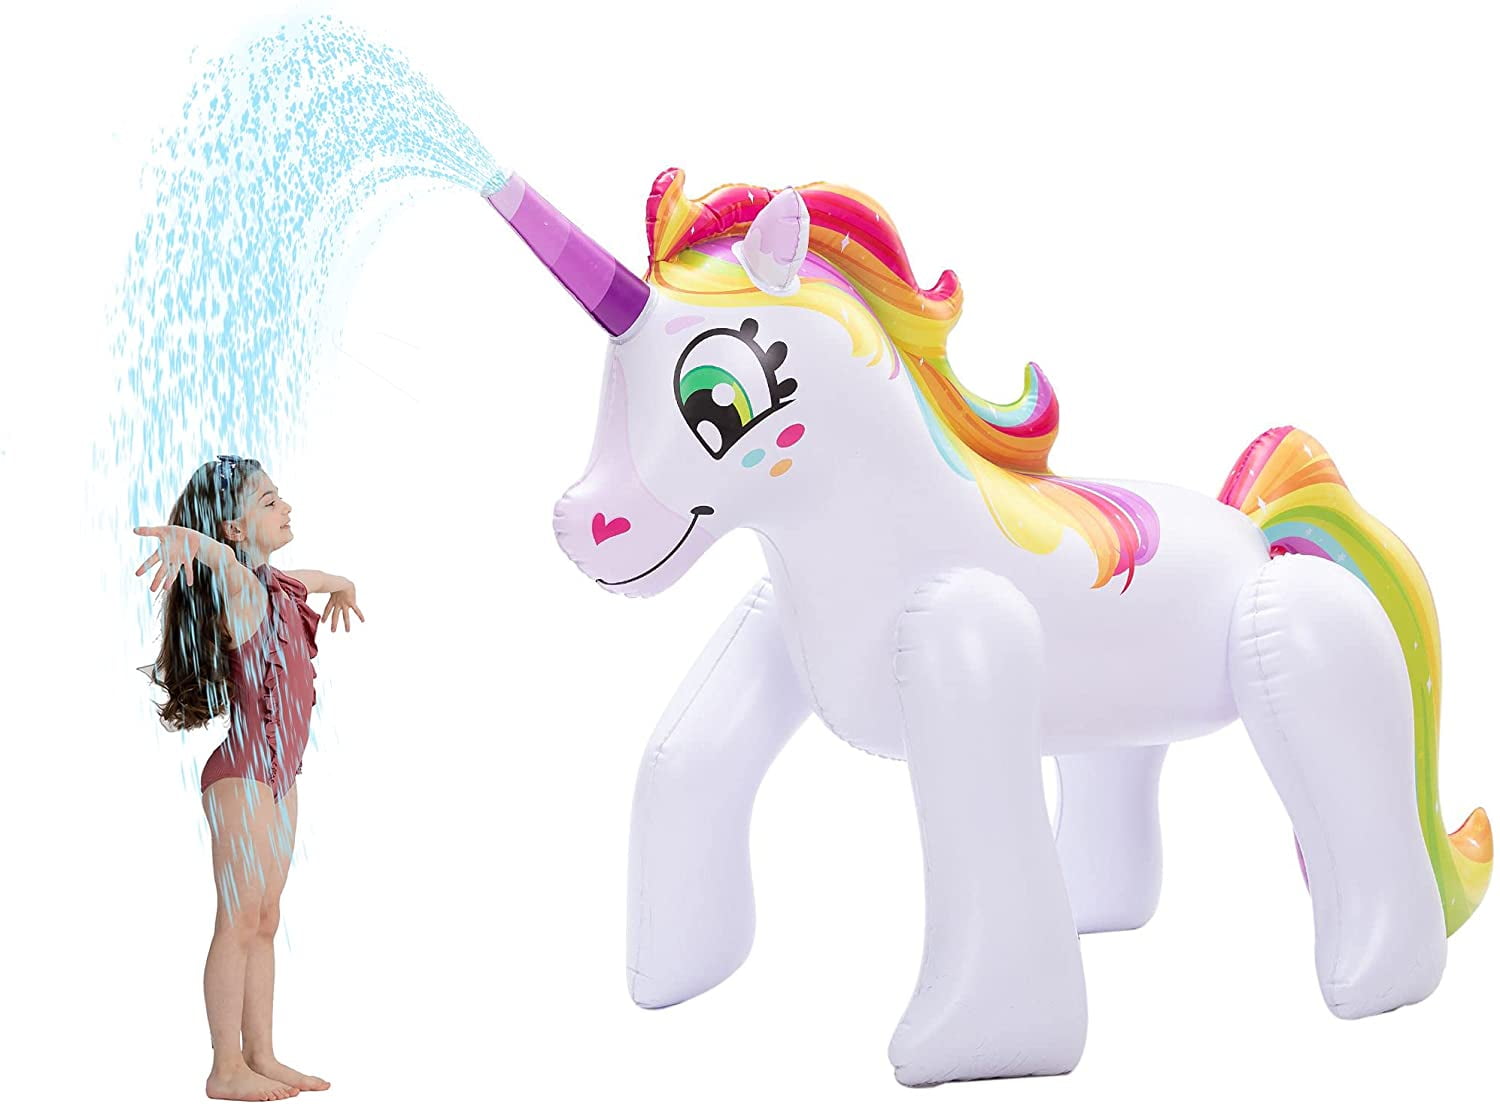 Giant Inflatable Unicorn Sprinkler Garden Fun Kids Toy Water Sprayer 6ft Tall D 